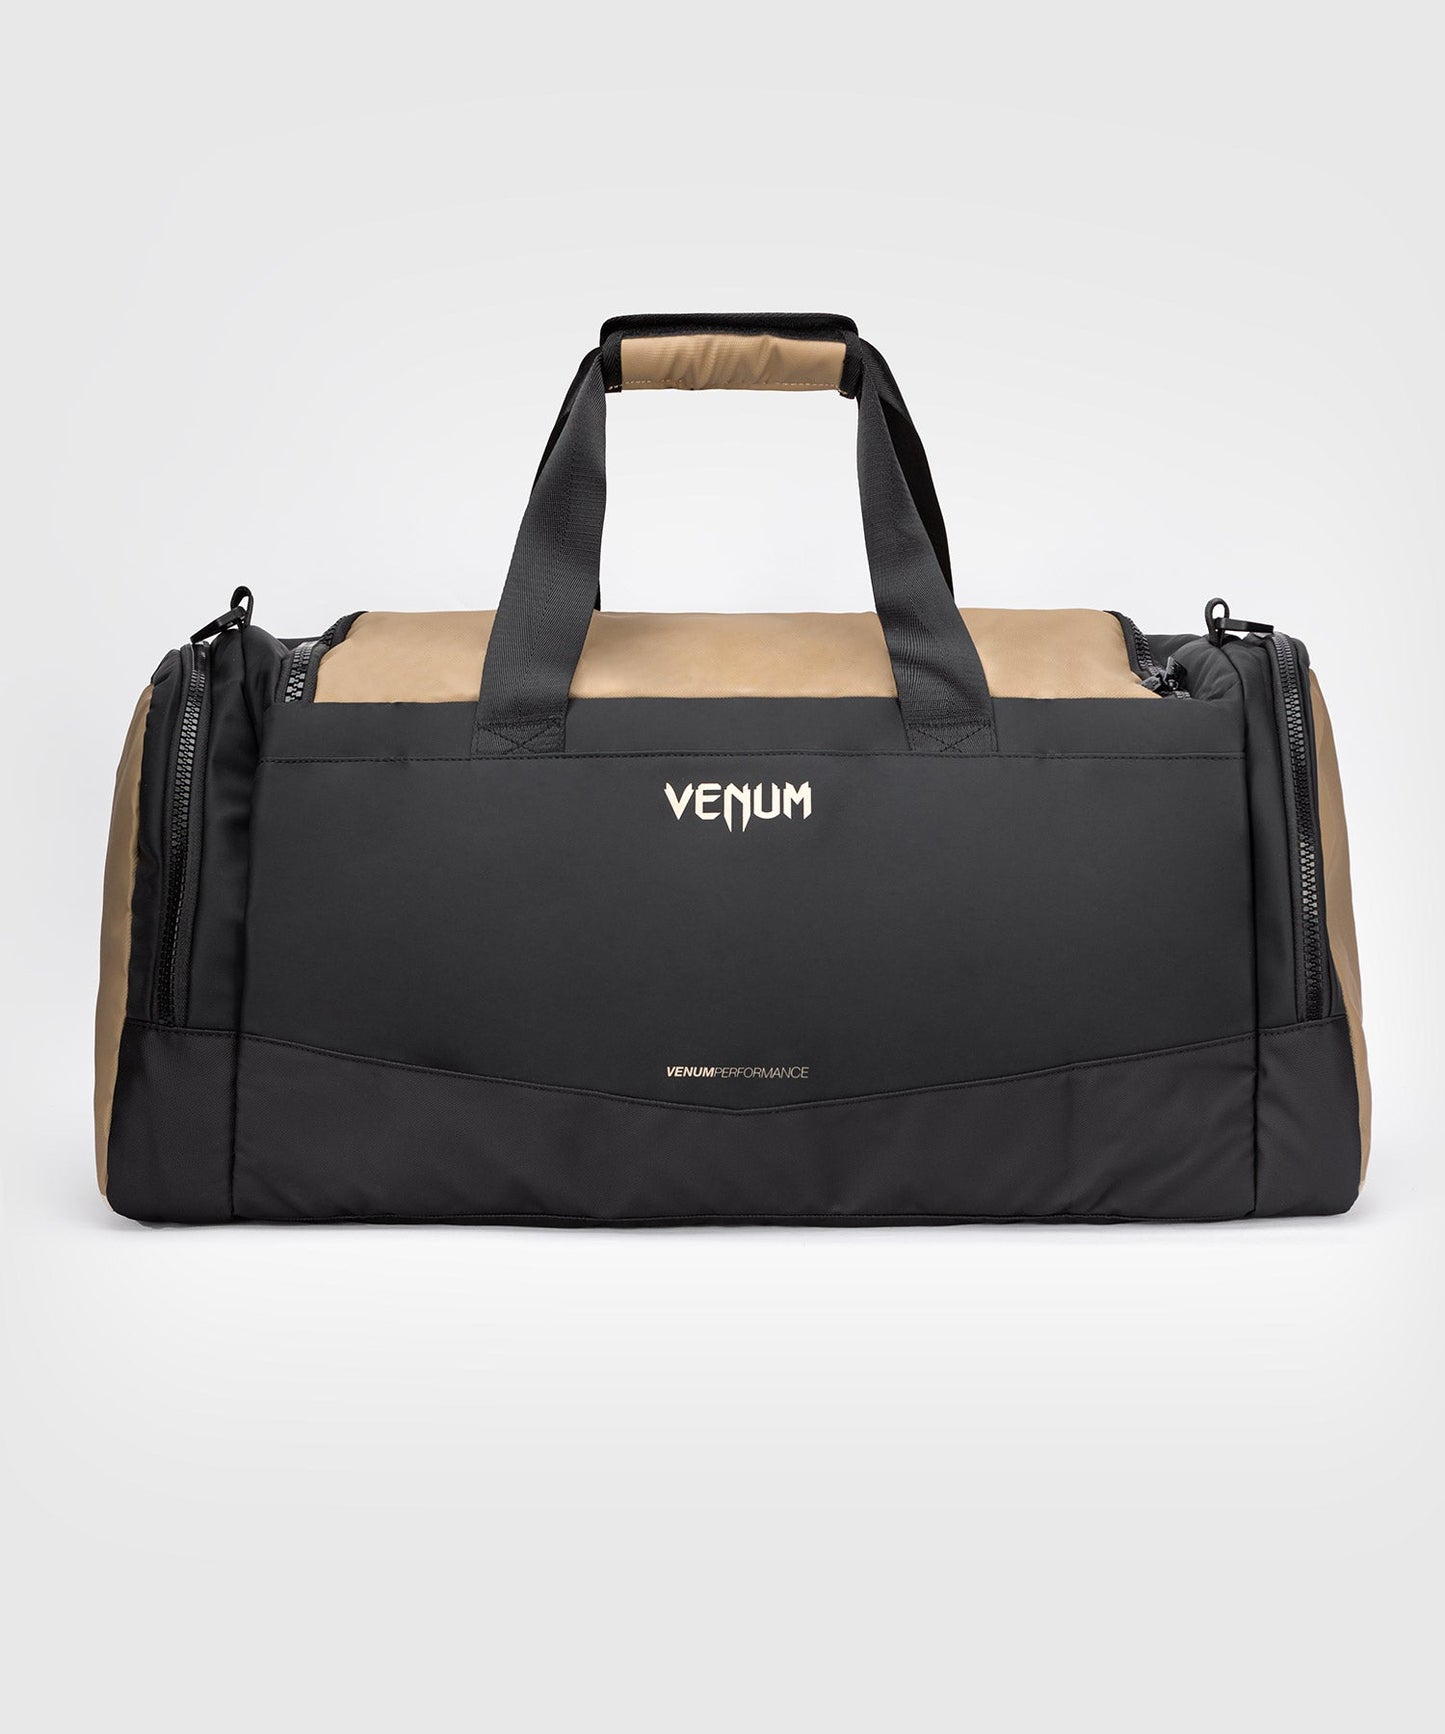 Venum Evo 2 Trainer Lite Duffle Bag - Black/Sand